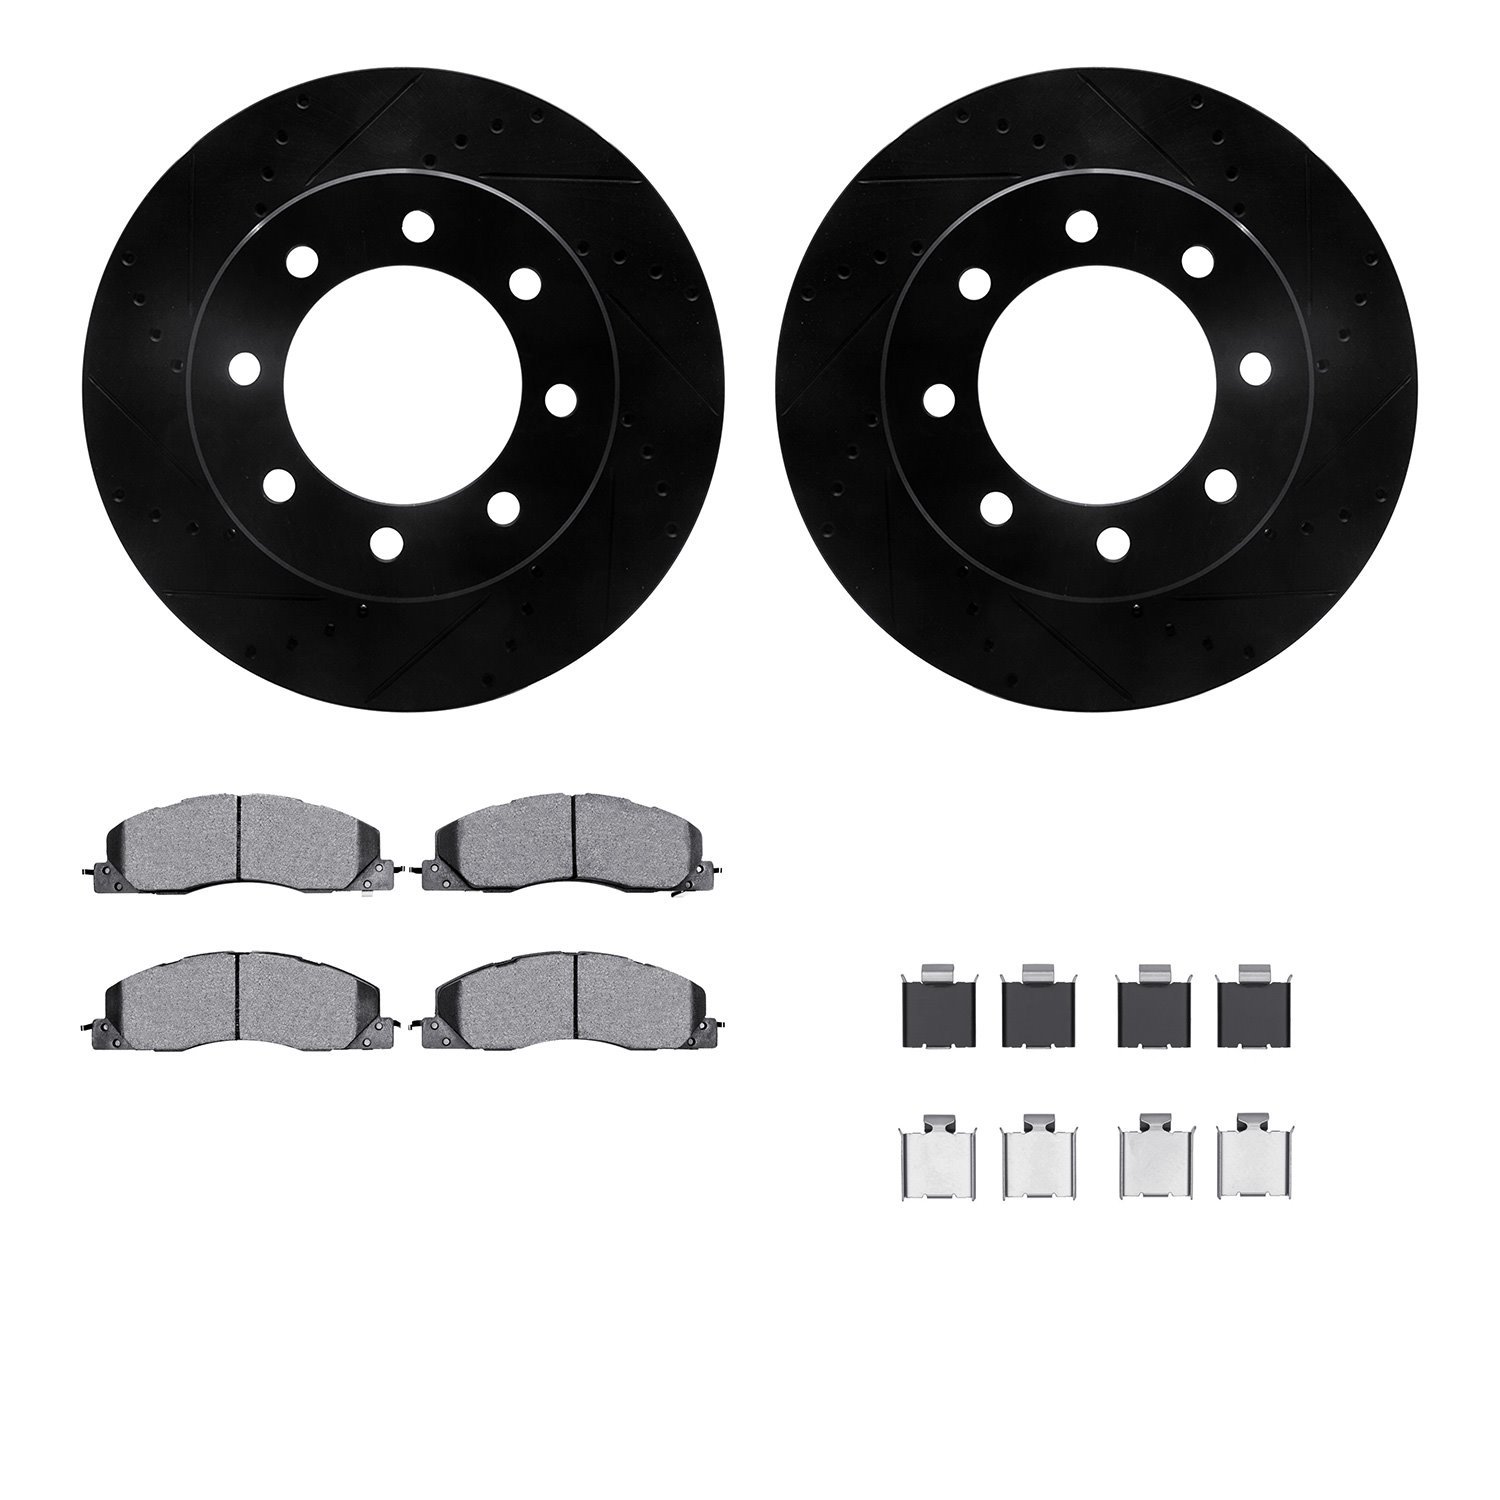 8412-40021 Drilled/Slotted Brake Rotors with Ultimate-Duty Brake Pads Kit & Hardware [Black], 2009-2018 Mopar, Position: Front